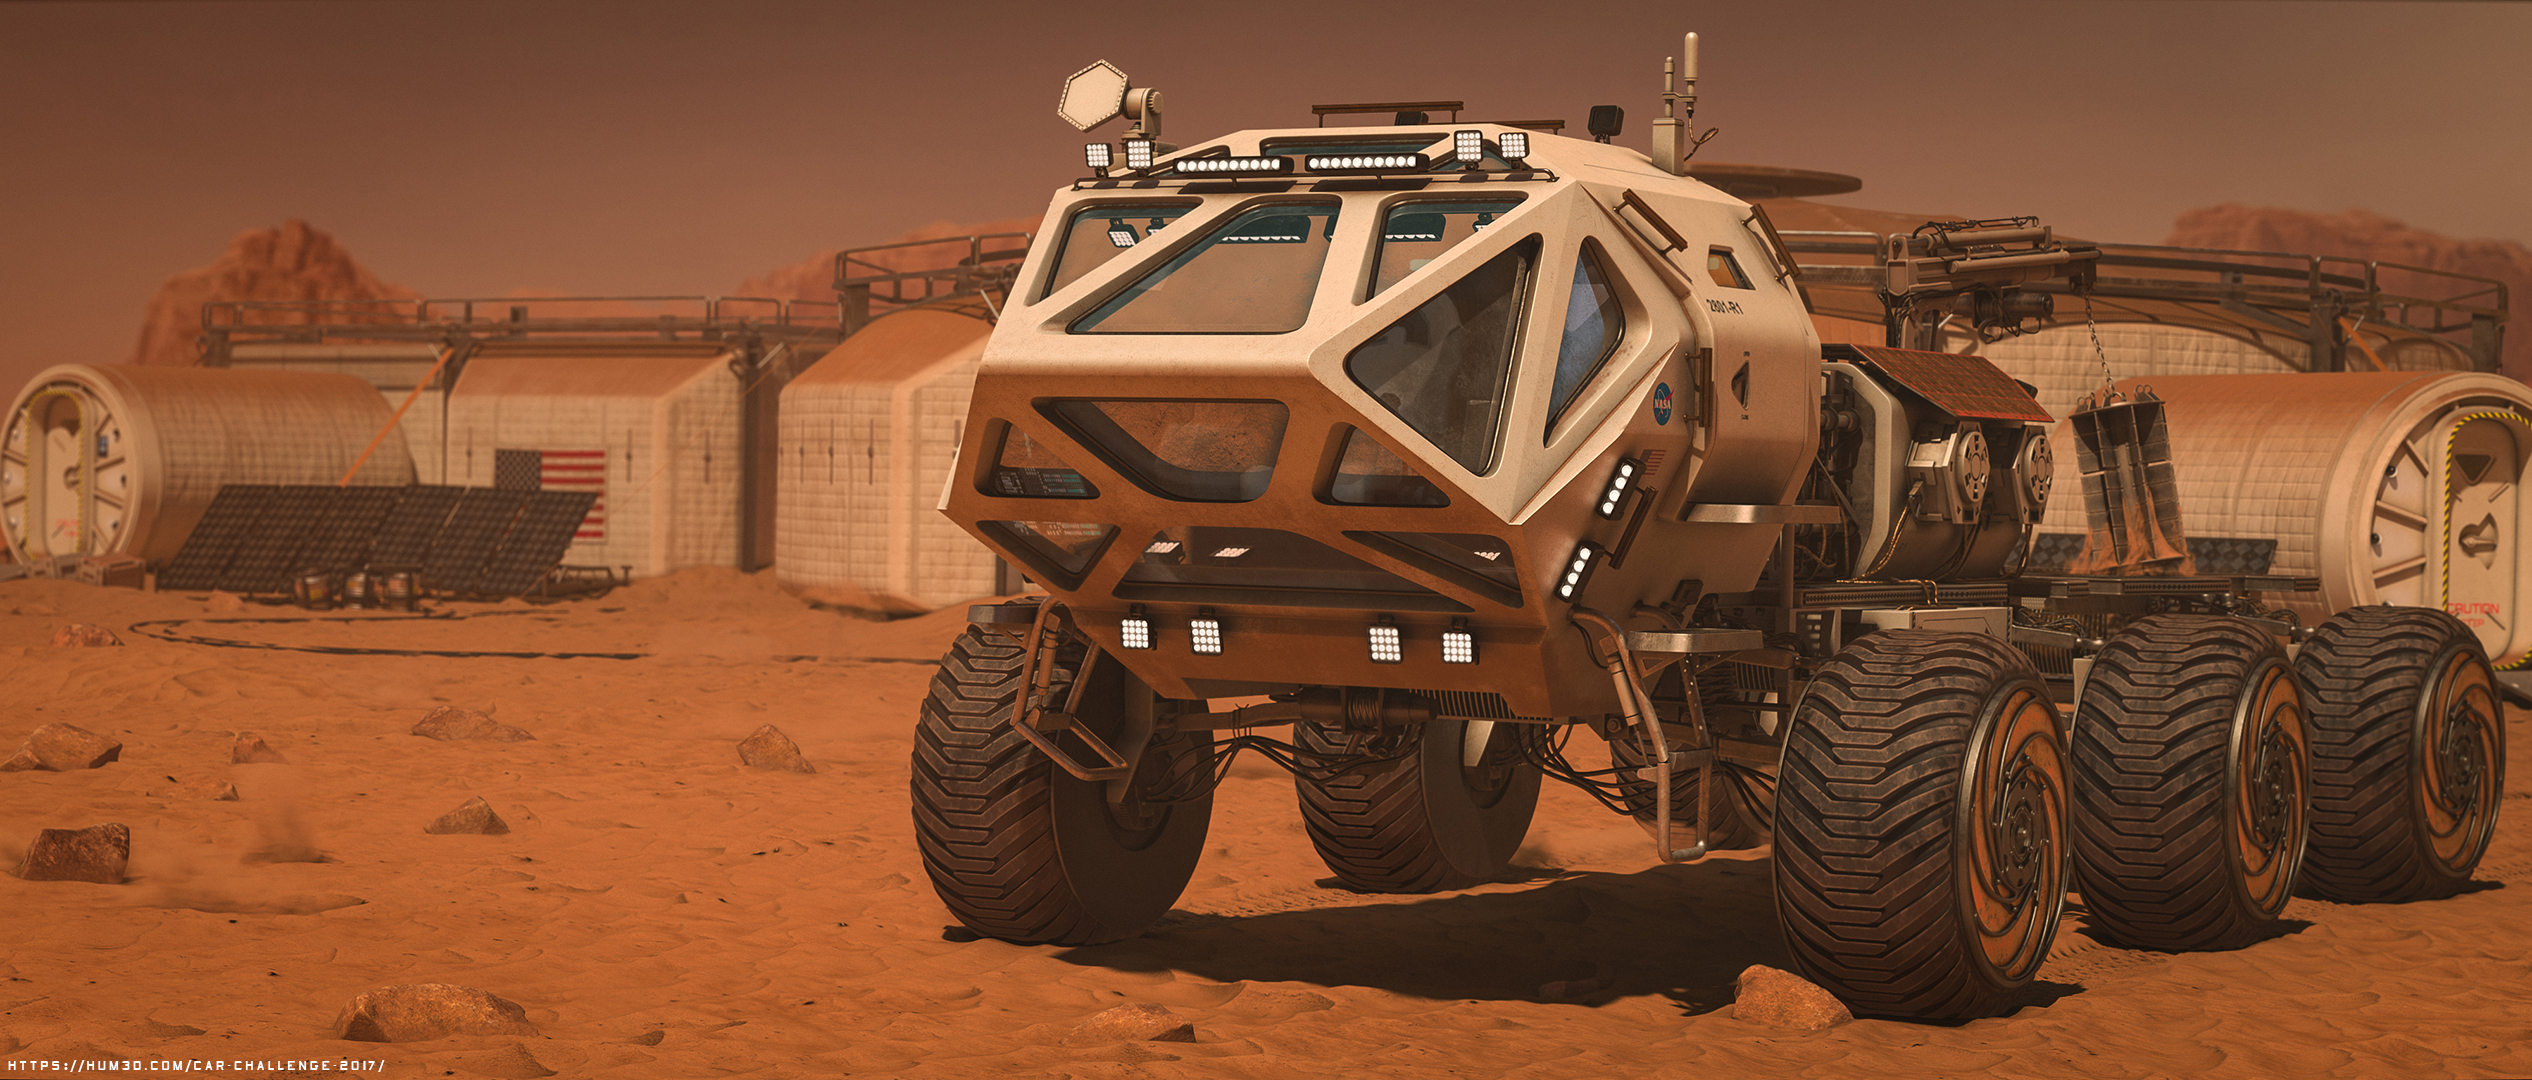 The Martian Rover 3d art